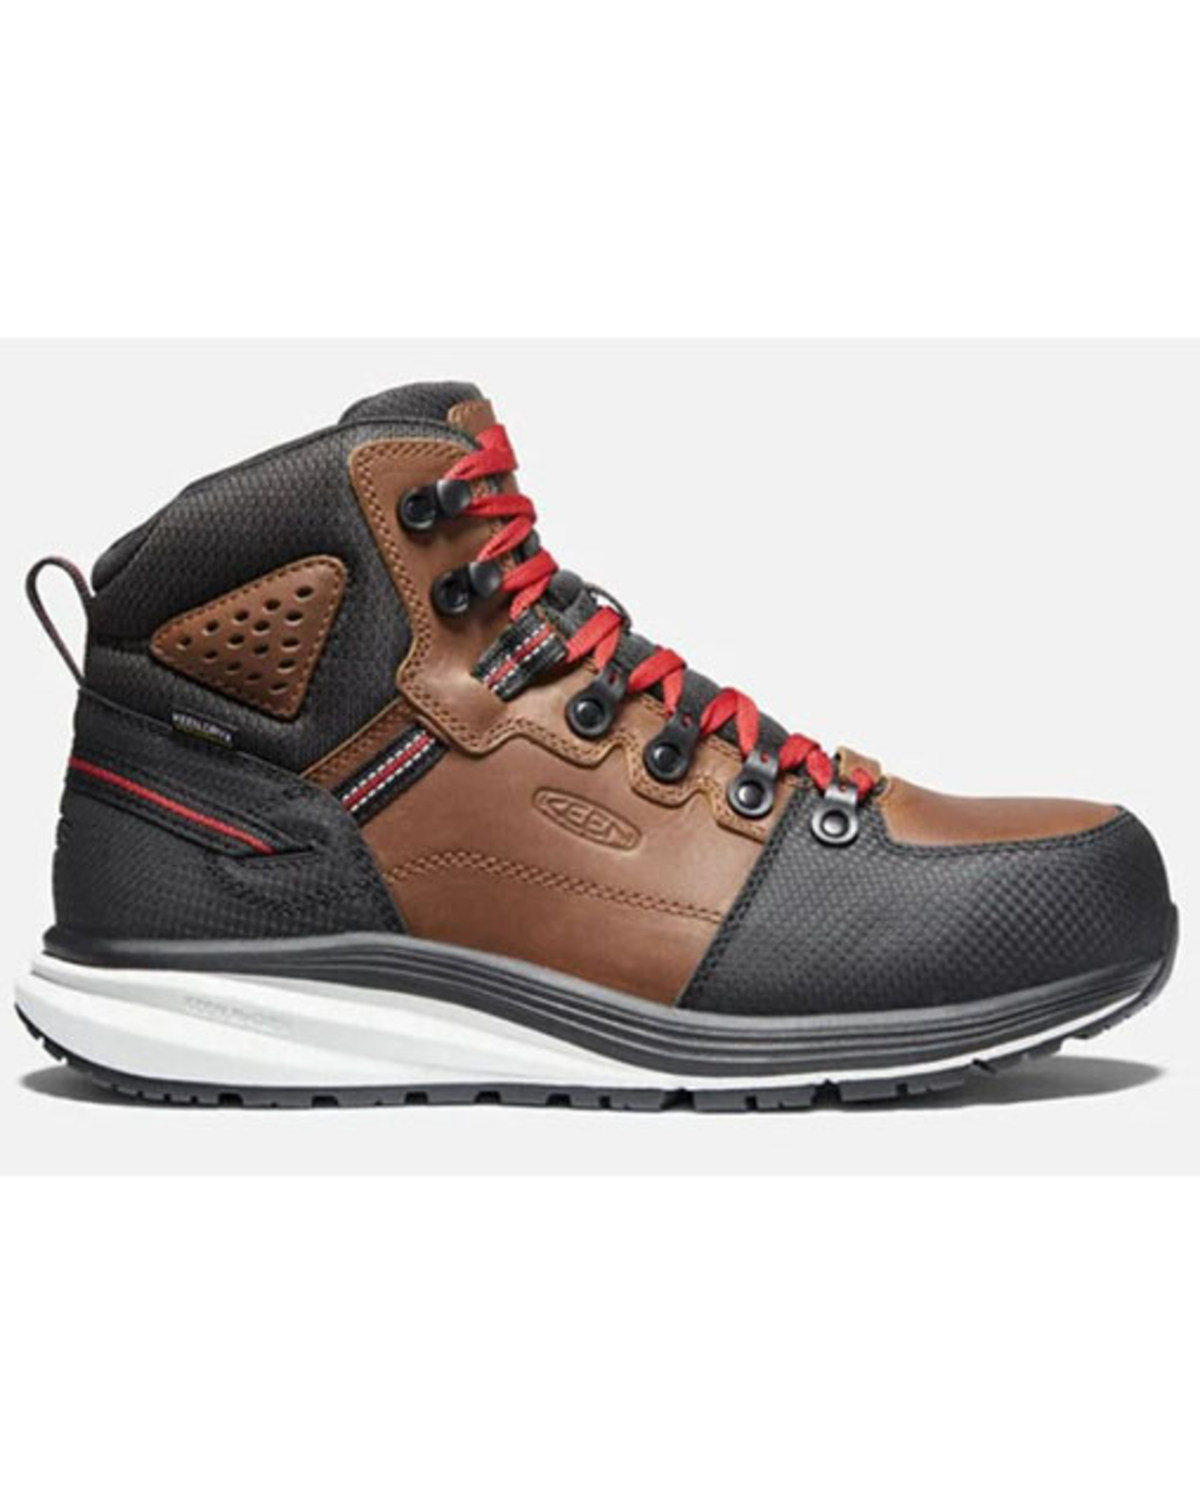 Keen Men's Red Hook Waterproof Work Shoes - Carbon Toe